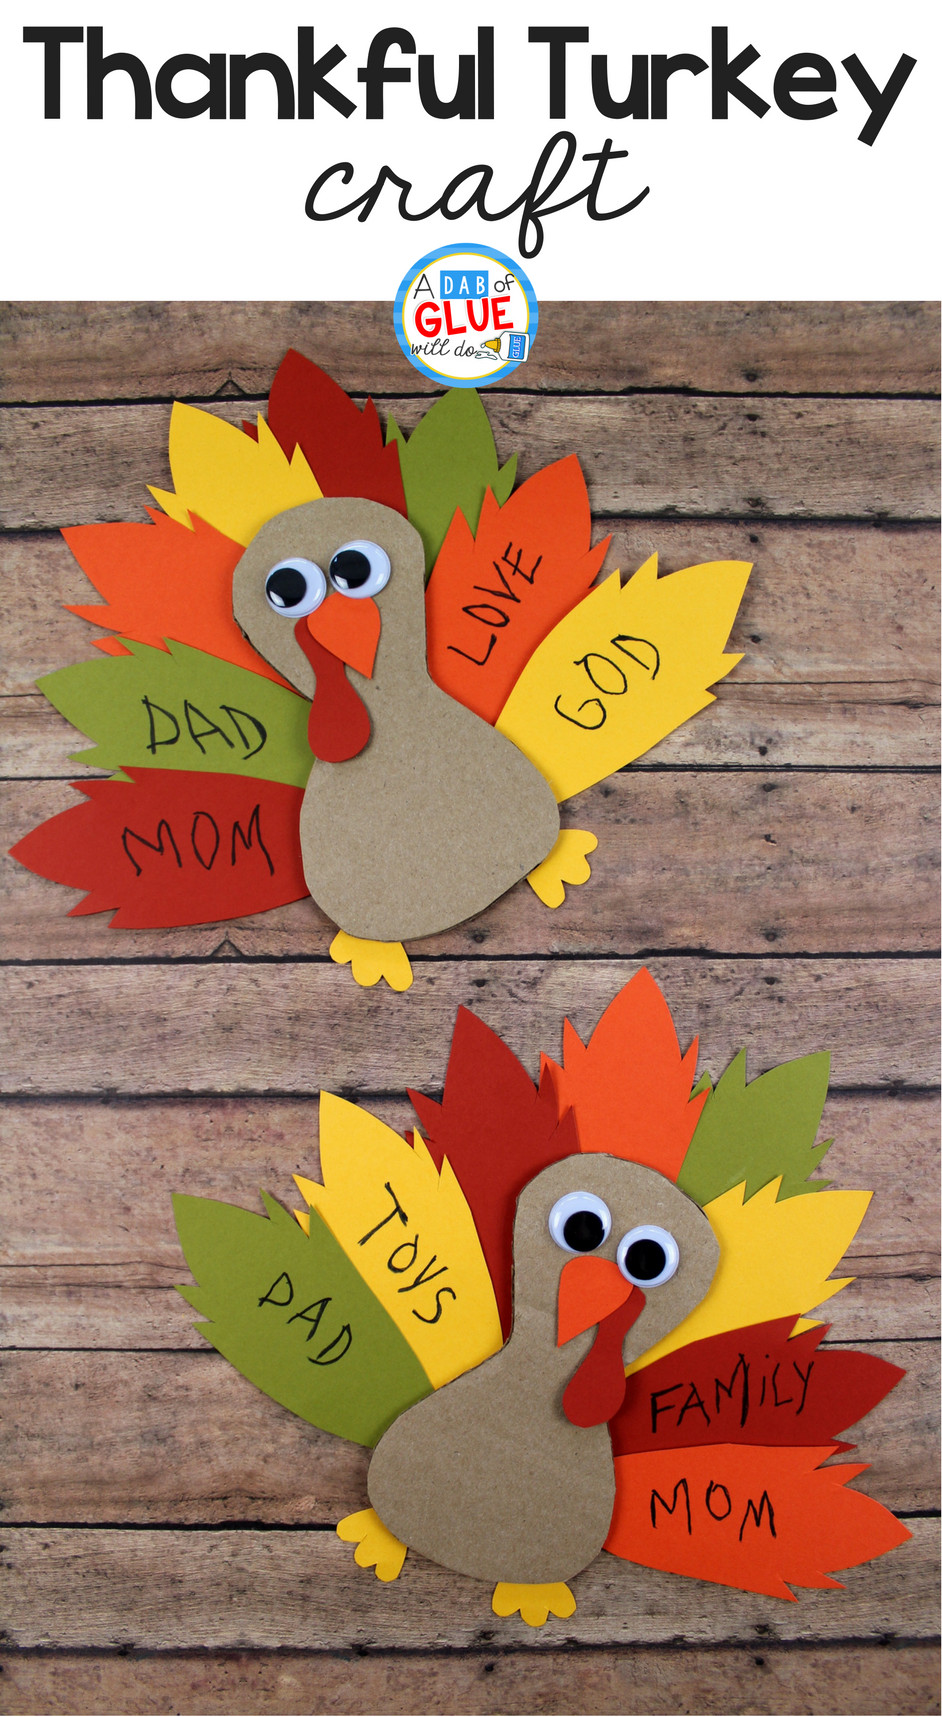 Thanksgiving Crafts For Preschoolers
 Cardboard Thankful Turkey Craft